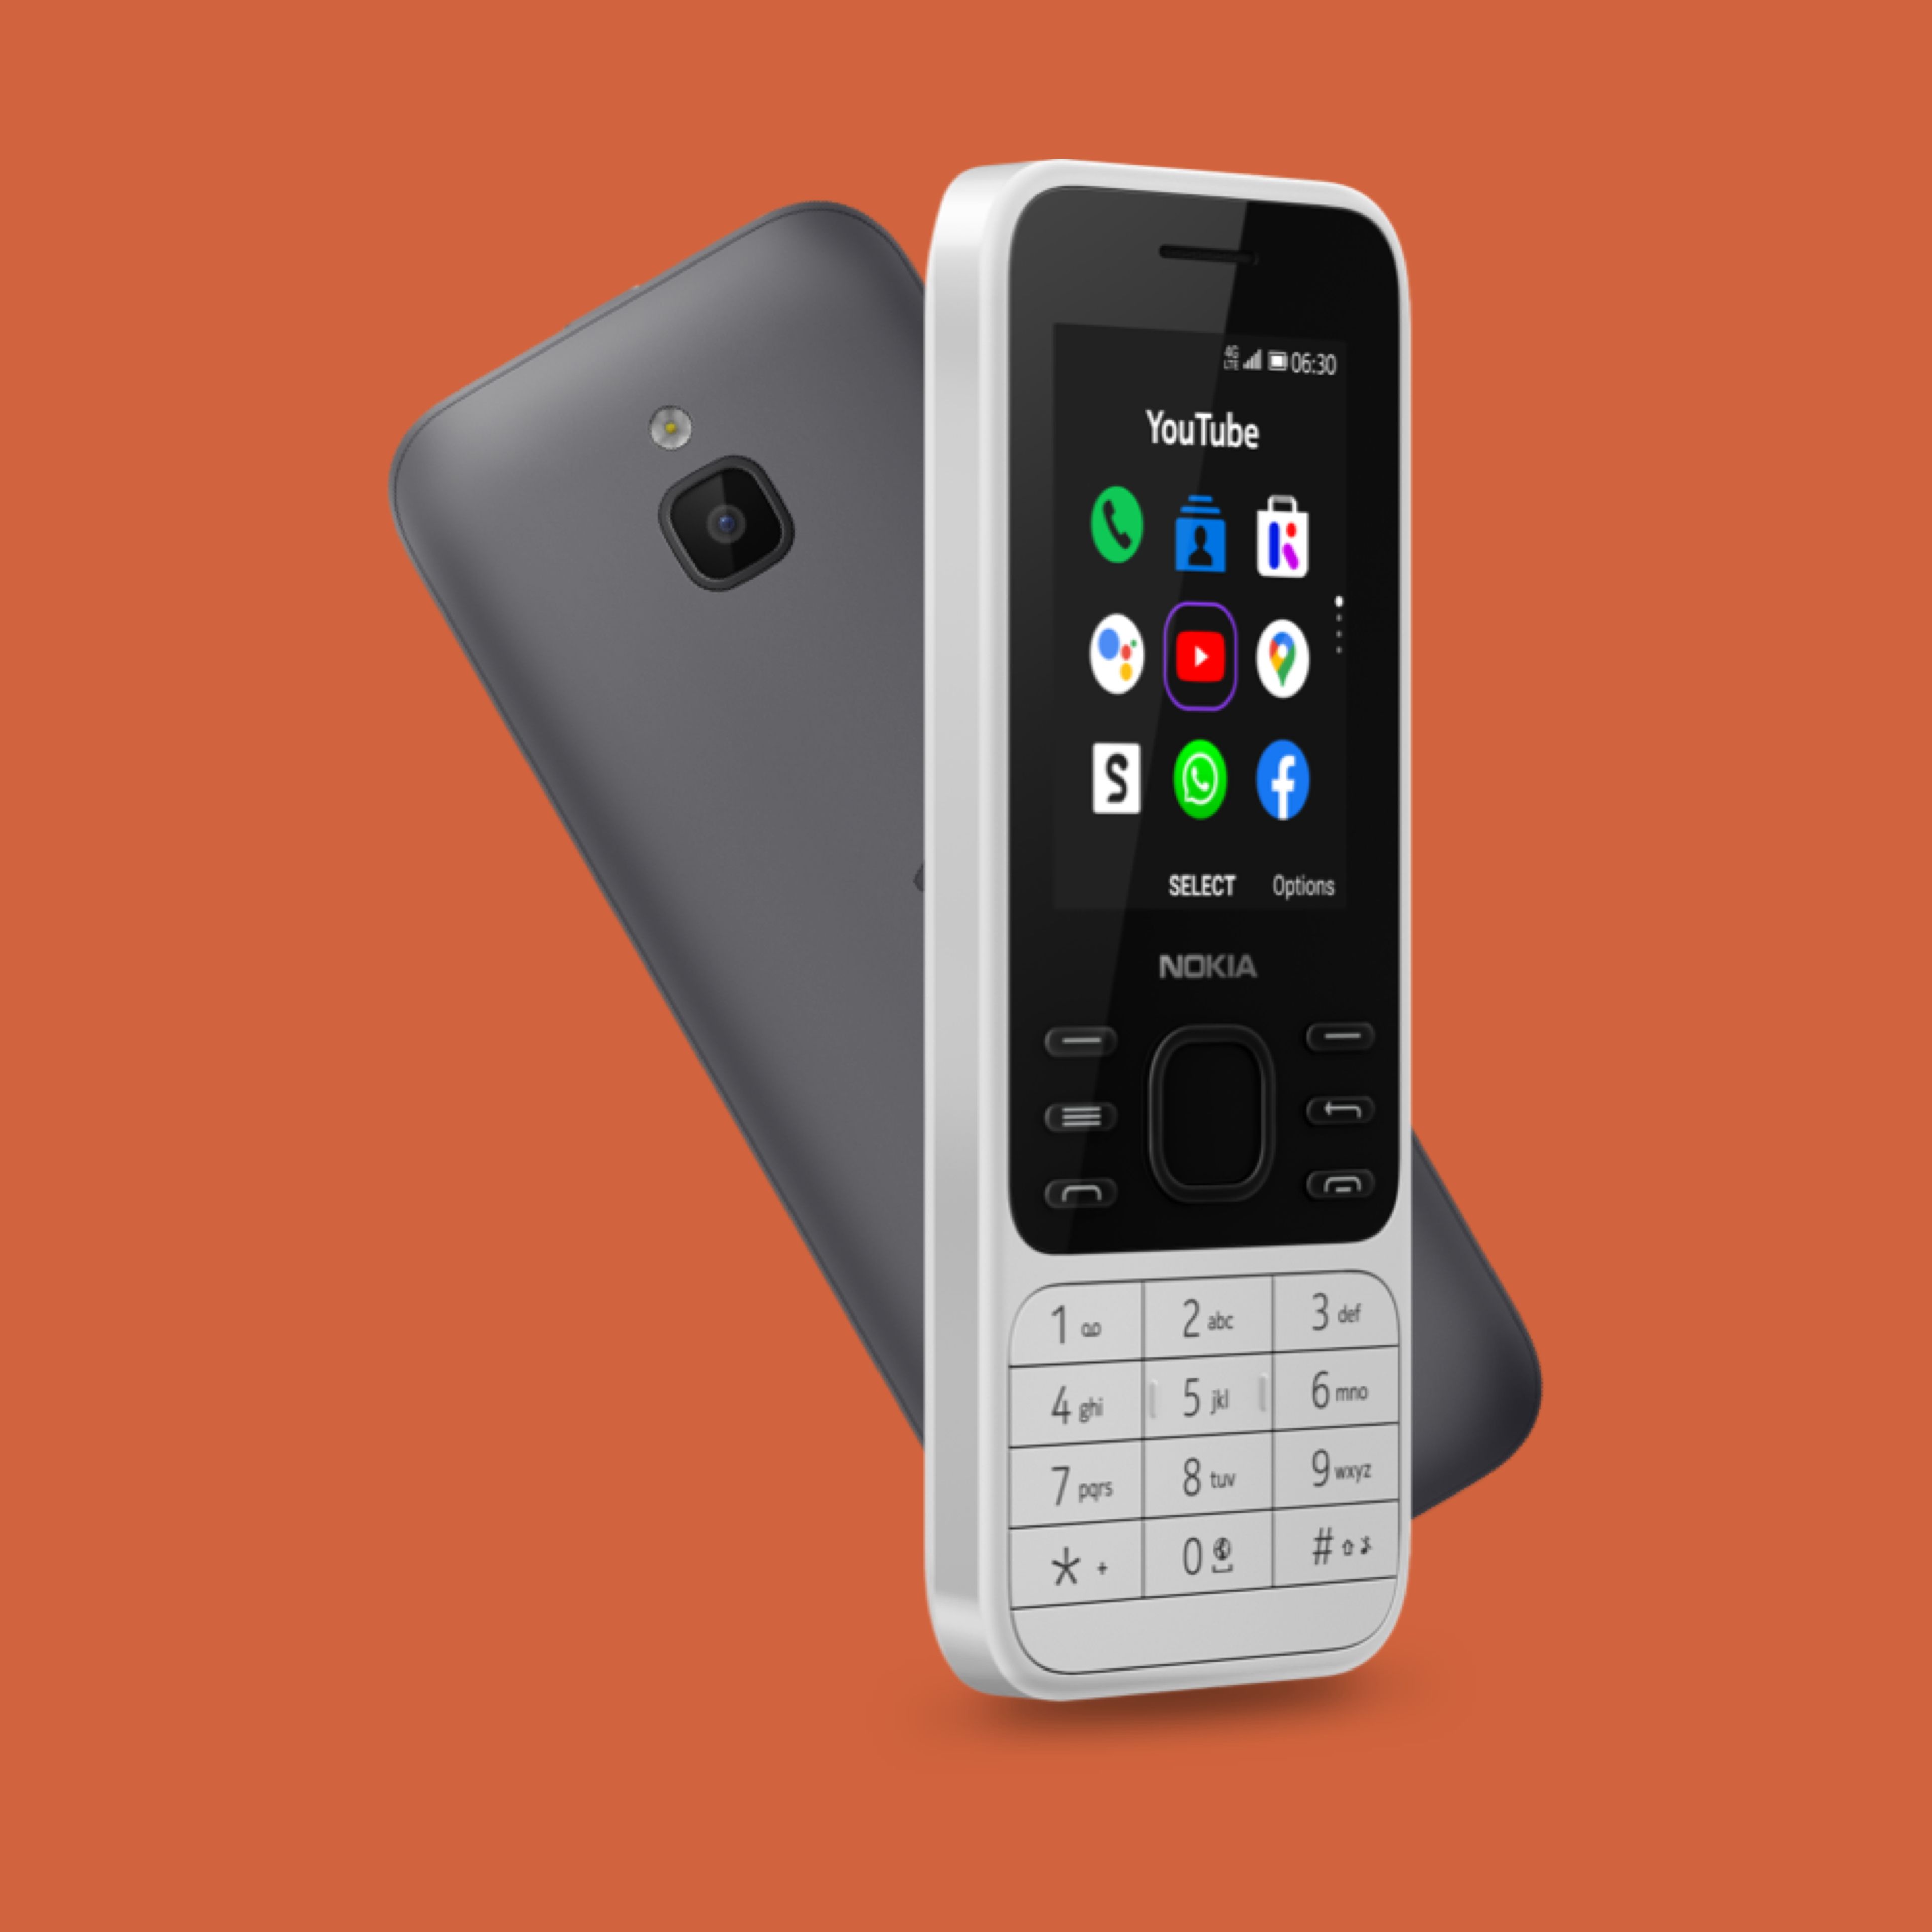 Nokia 6300 4g doble chip - flexishoptv2020 - ID 1080746